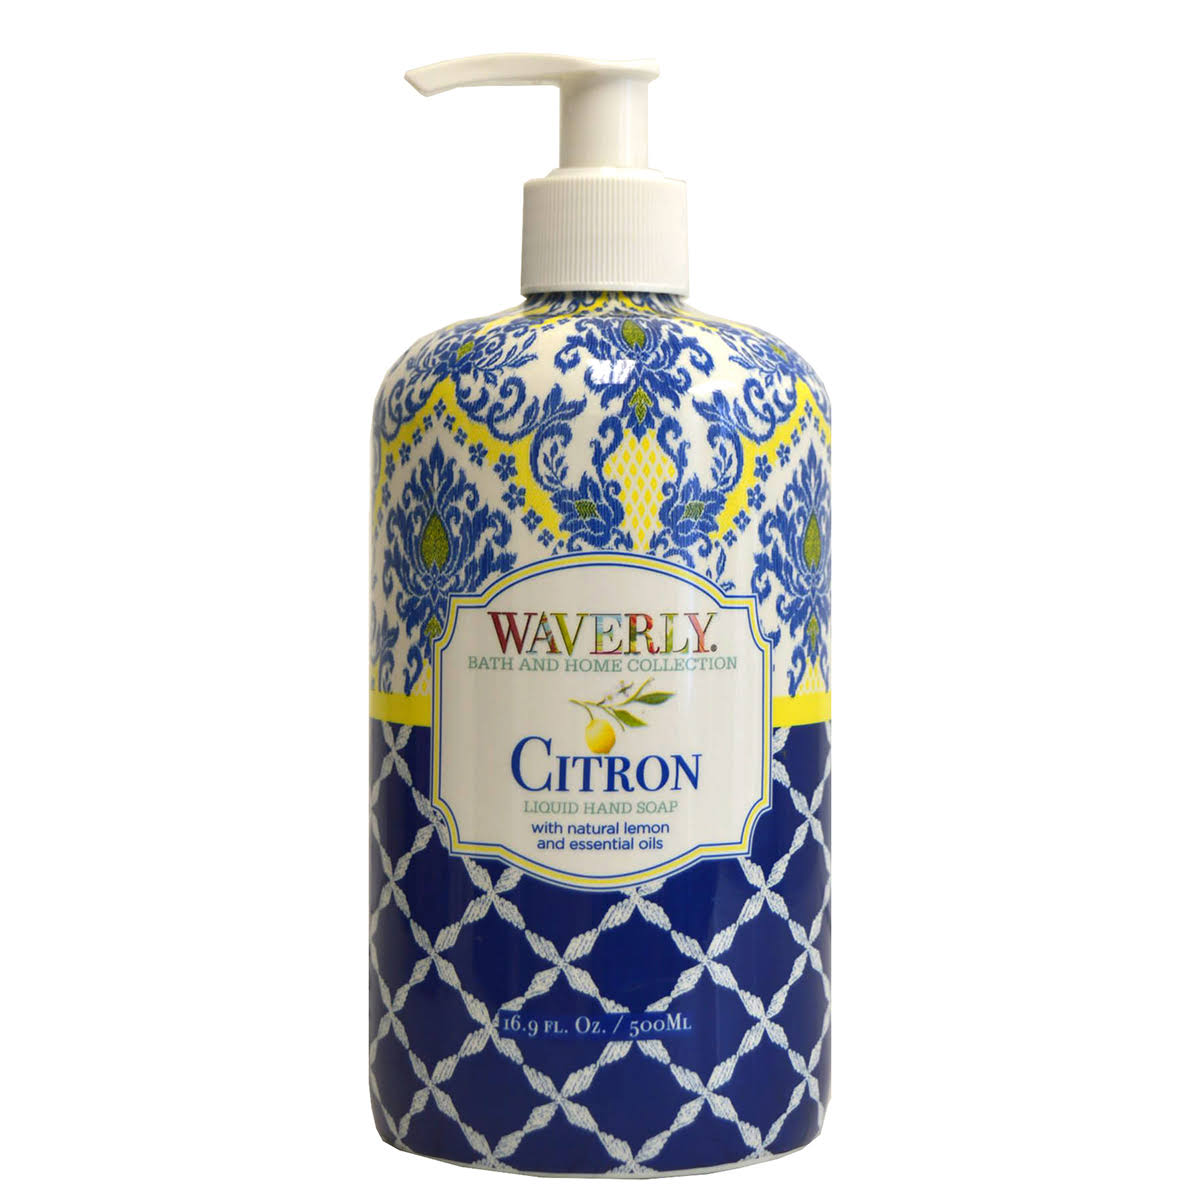 Waverly Premium Hand Soap, Citron, 16.9 oz